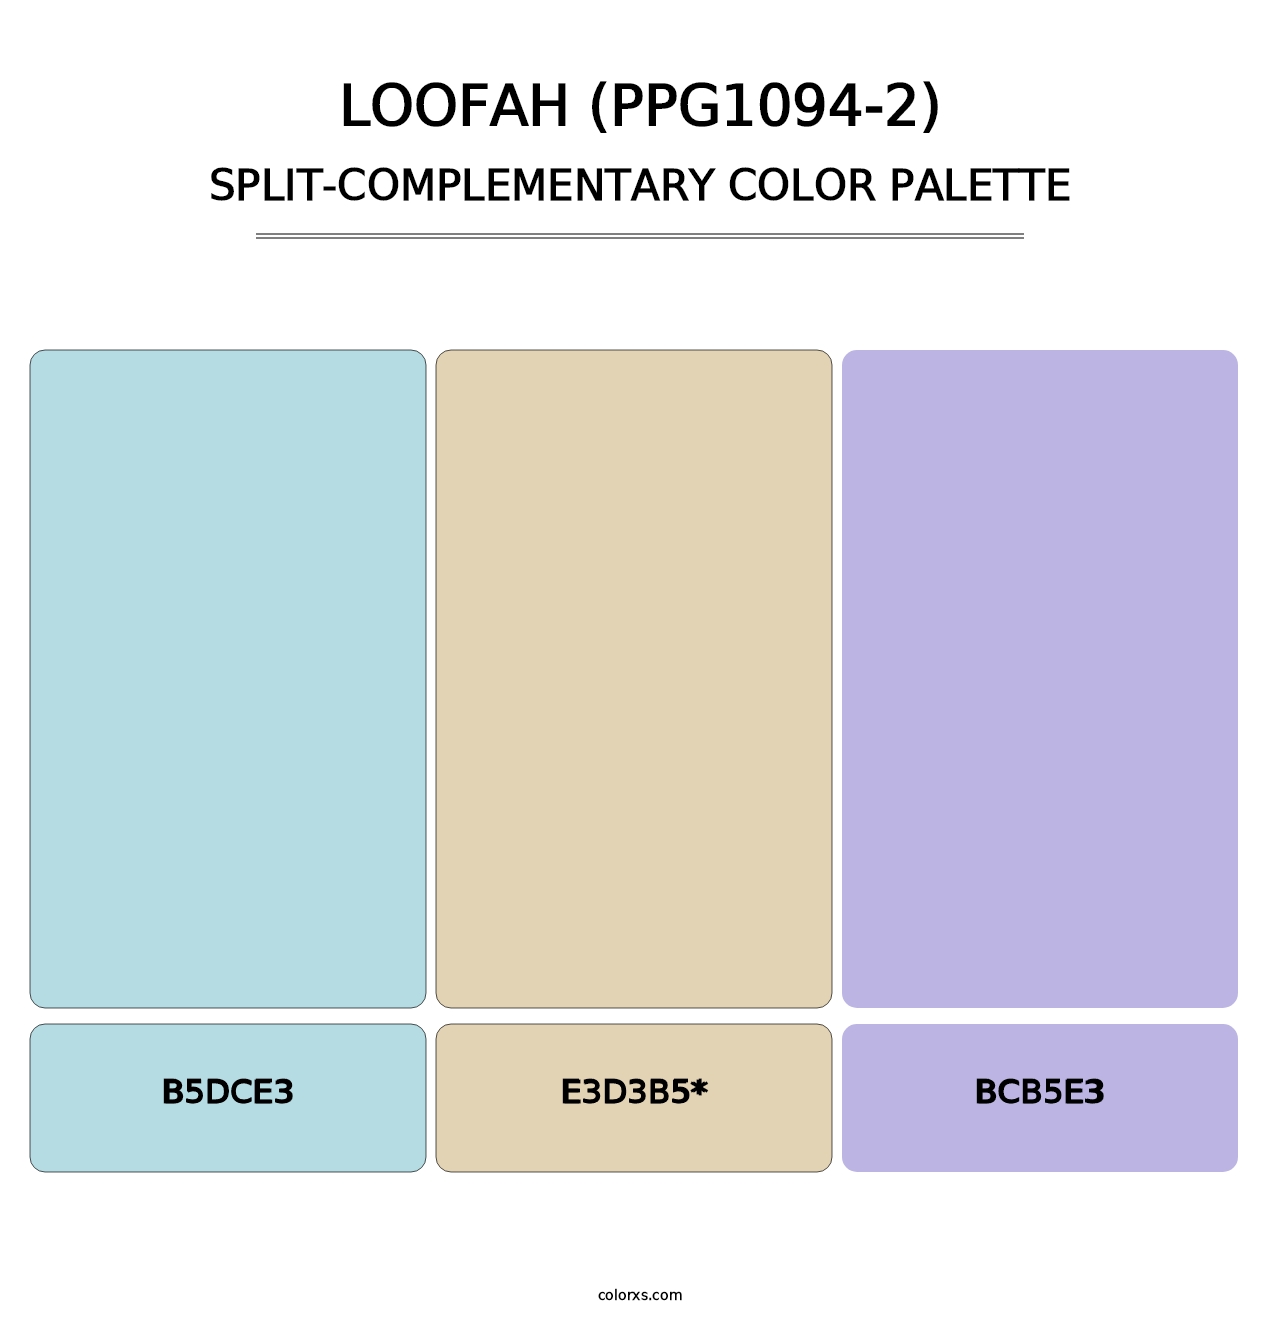 Loofah (PPG1094-2) - Split-Complementary Color Palette